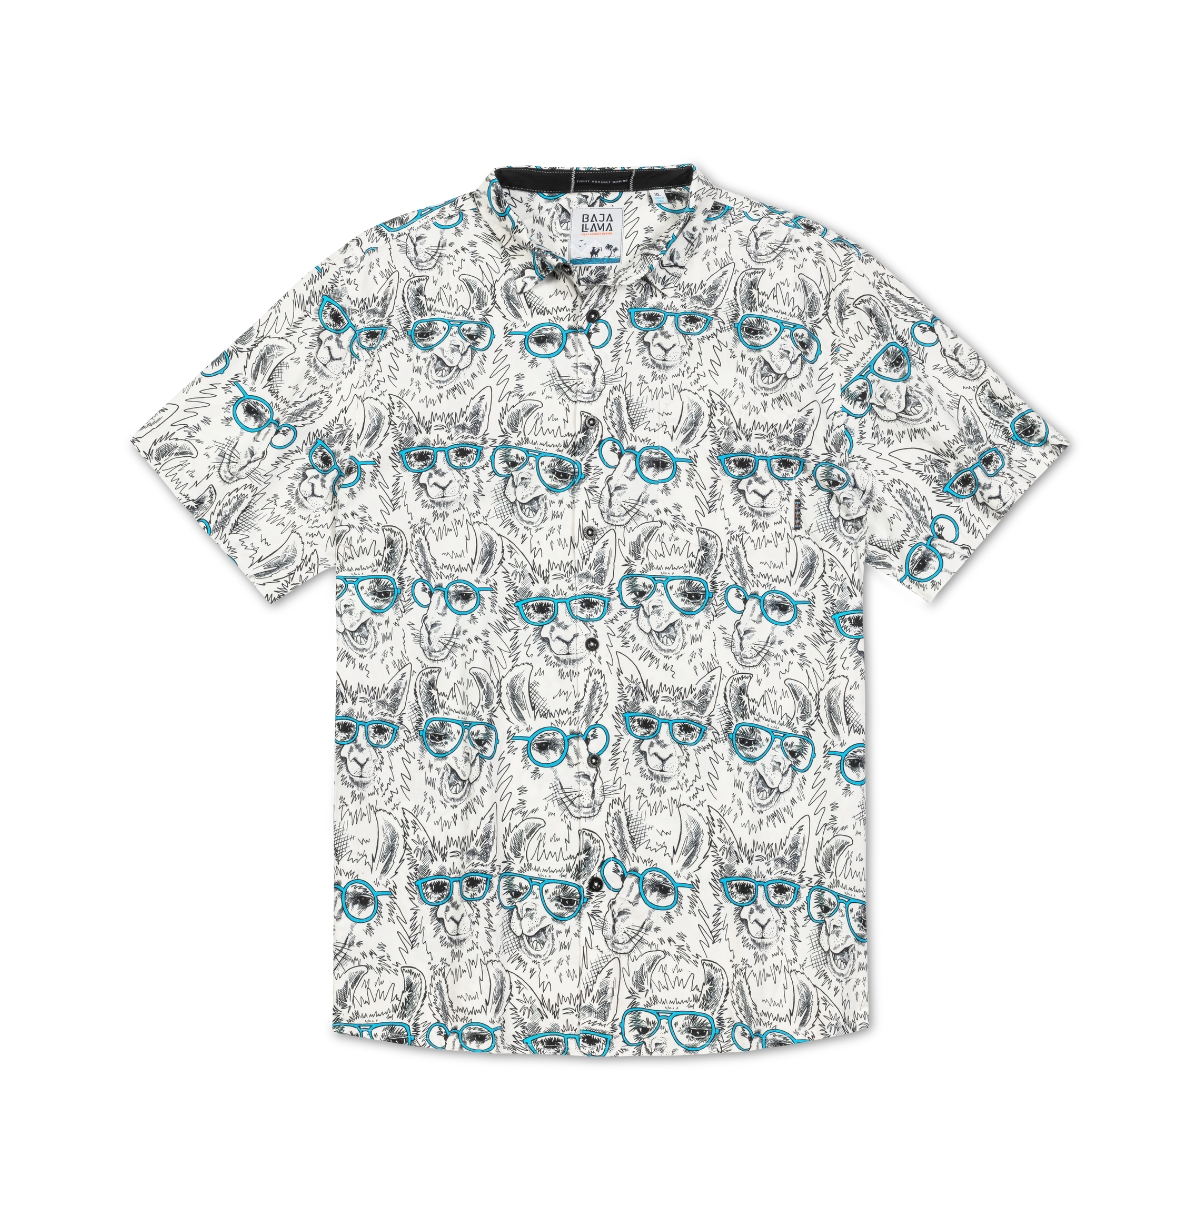 Men's Llama M.d. - 7-seas Button Up Shirt - Open White